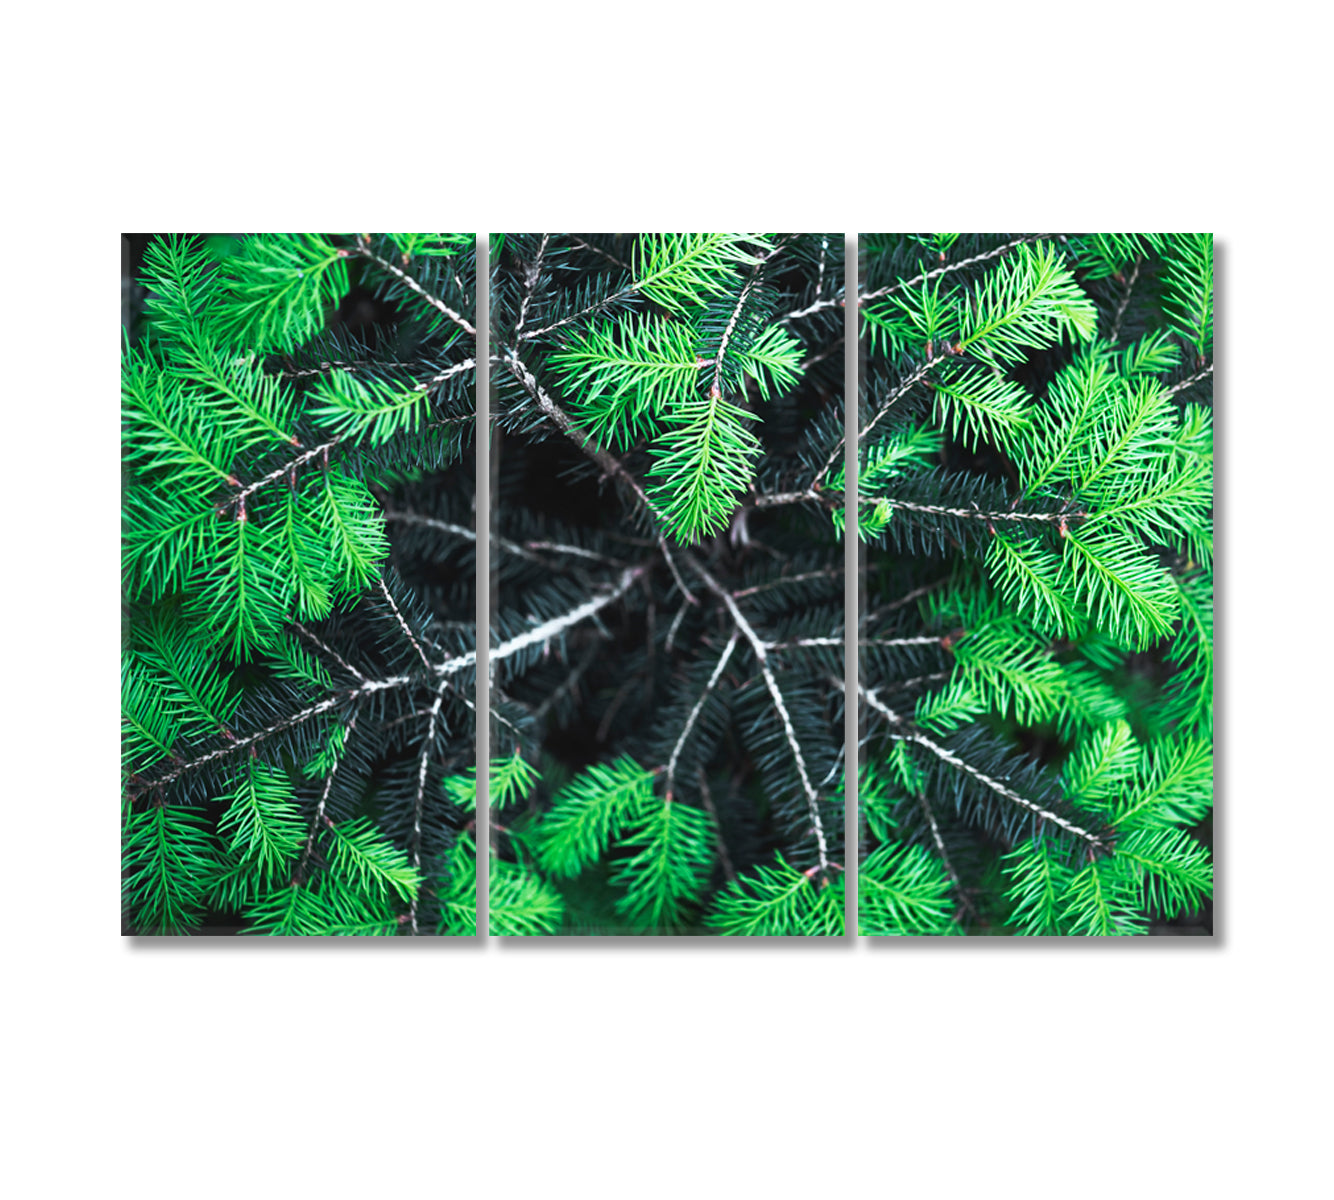 Green Spruce Needles Canvas Print-Canvas Print-CetArt-3 Panels-36x24 inches-CetArt